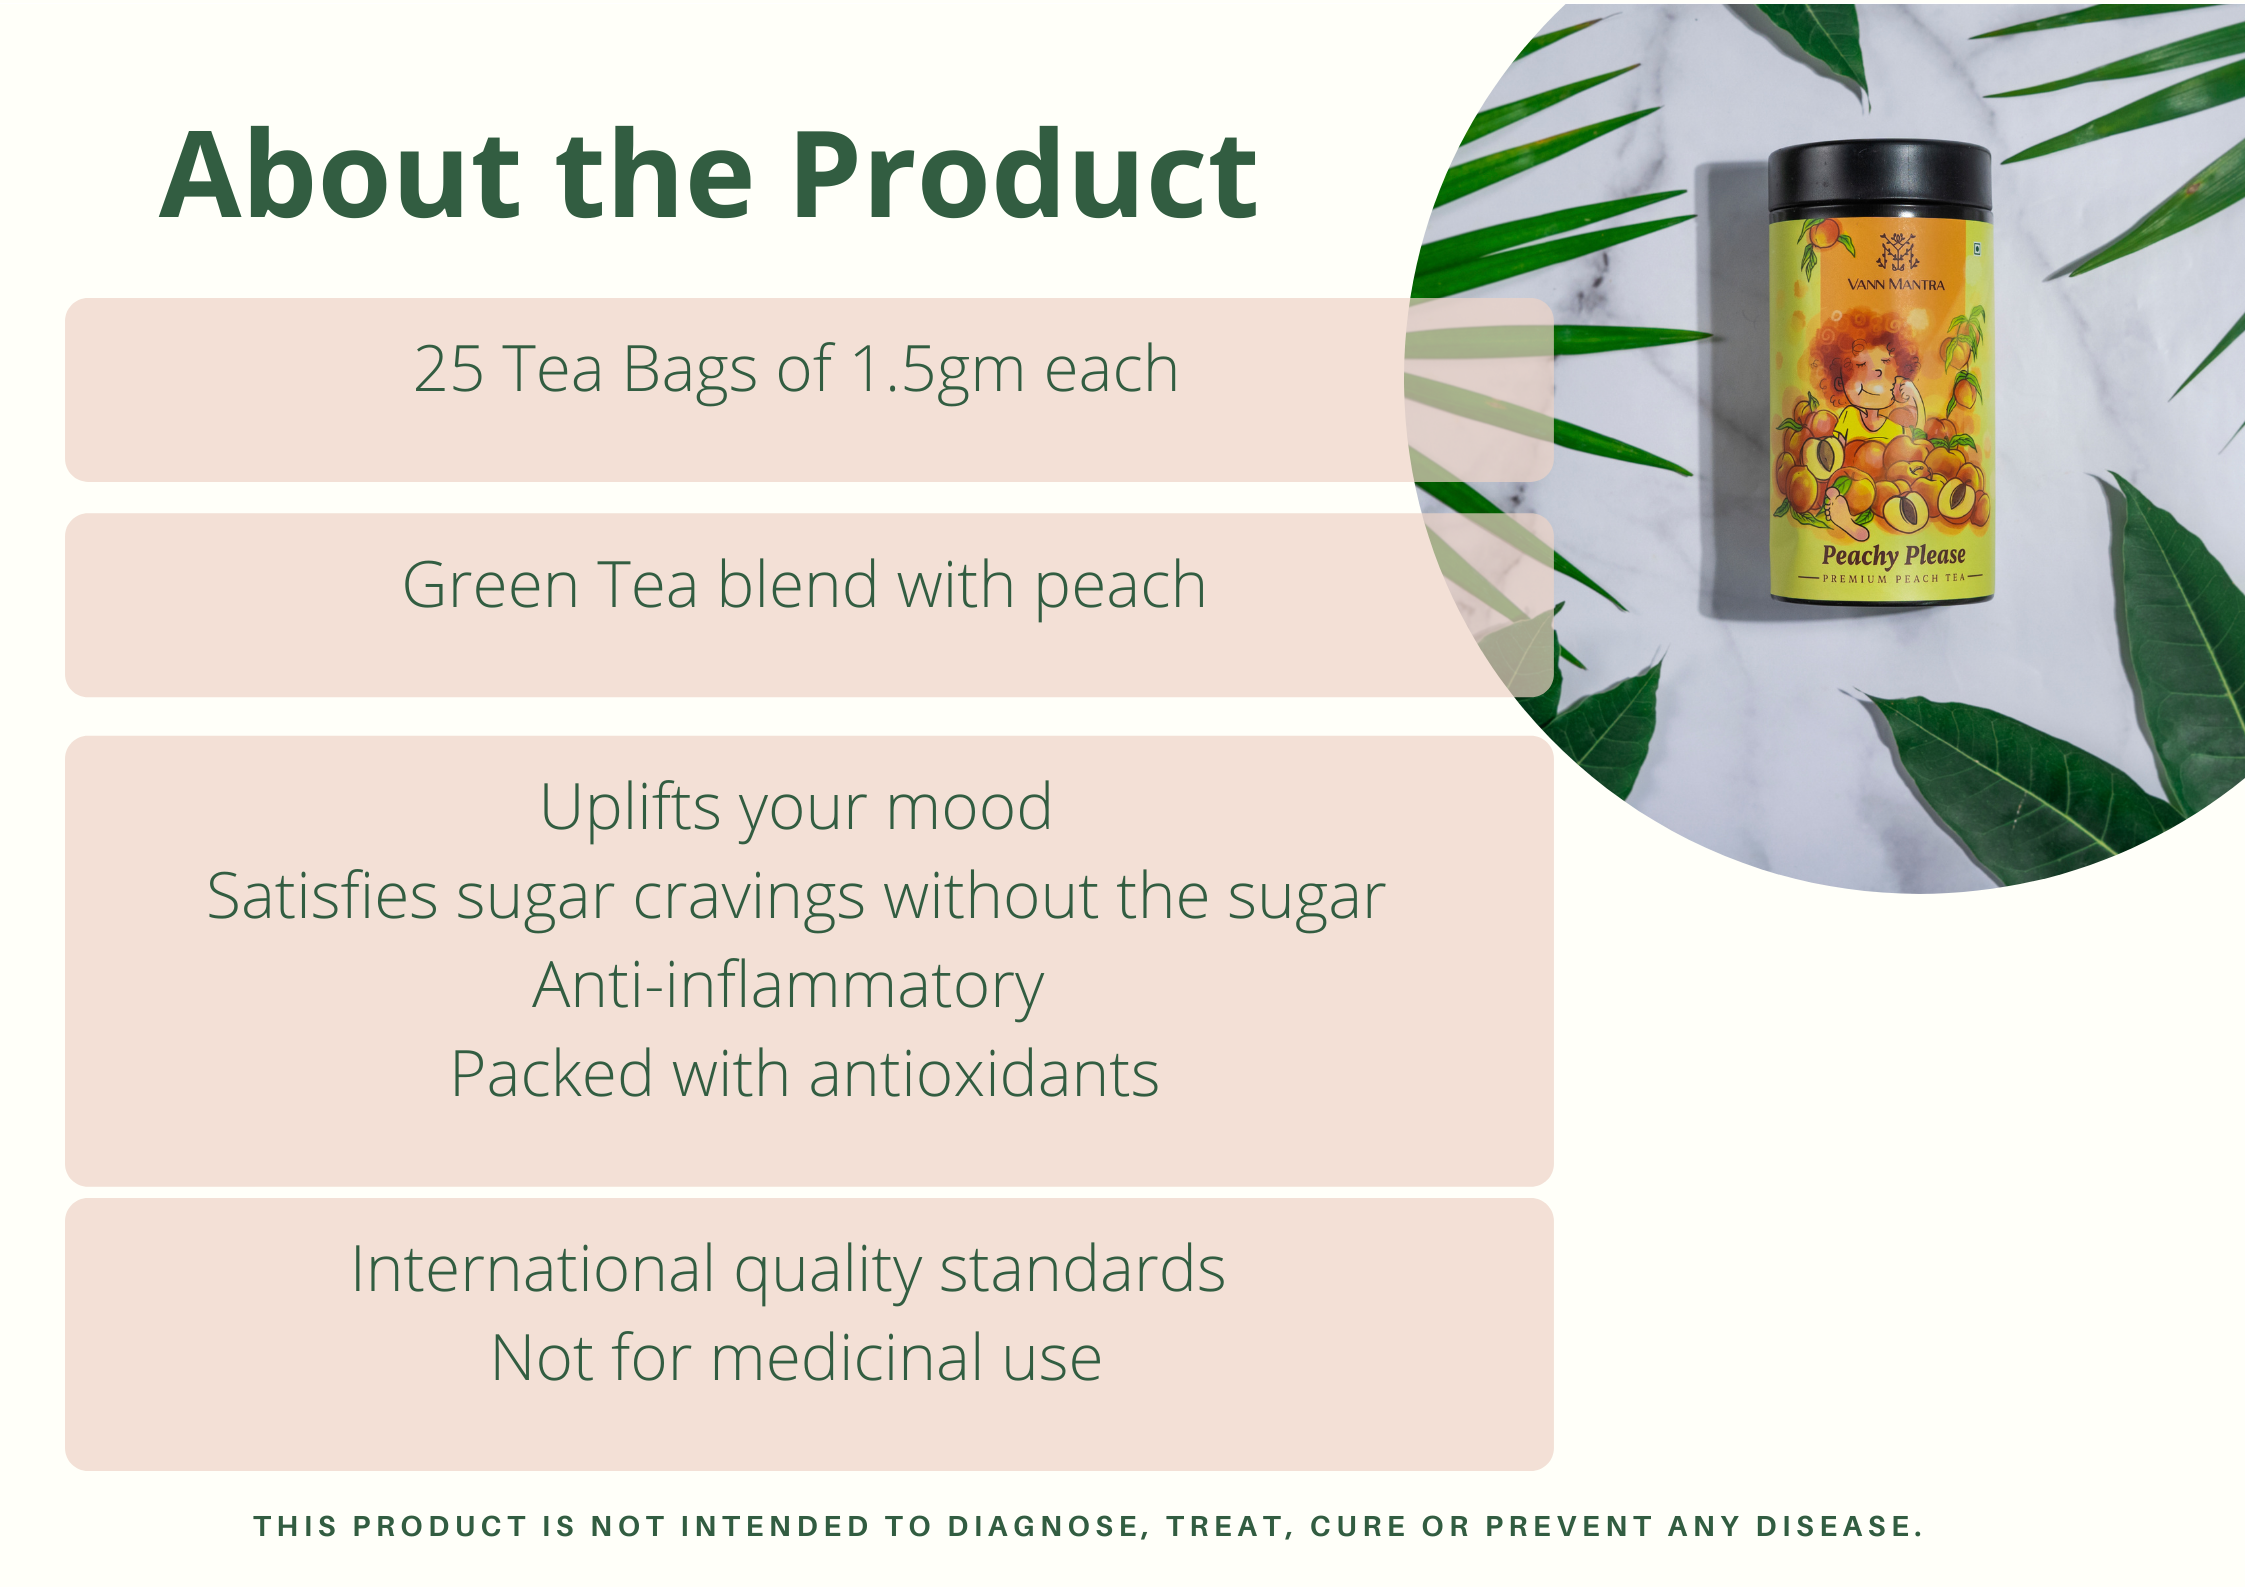 Infographic explaining the features and benefits Peachy Please- Premium Peach Tea